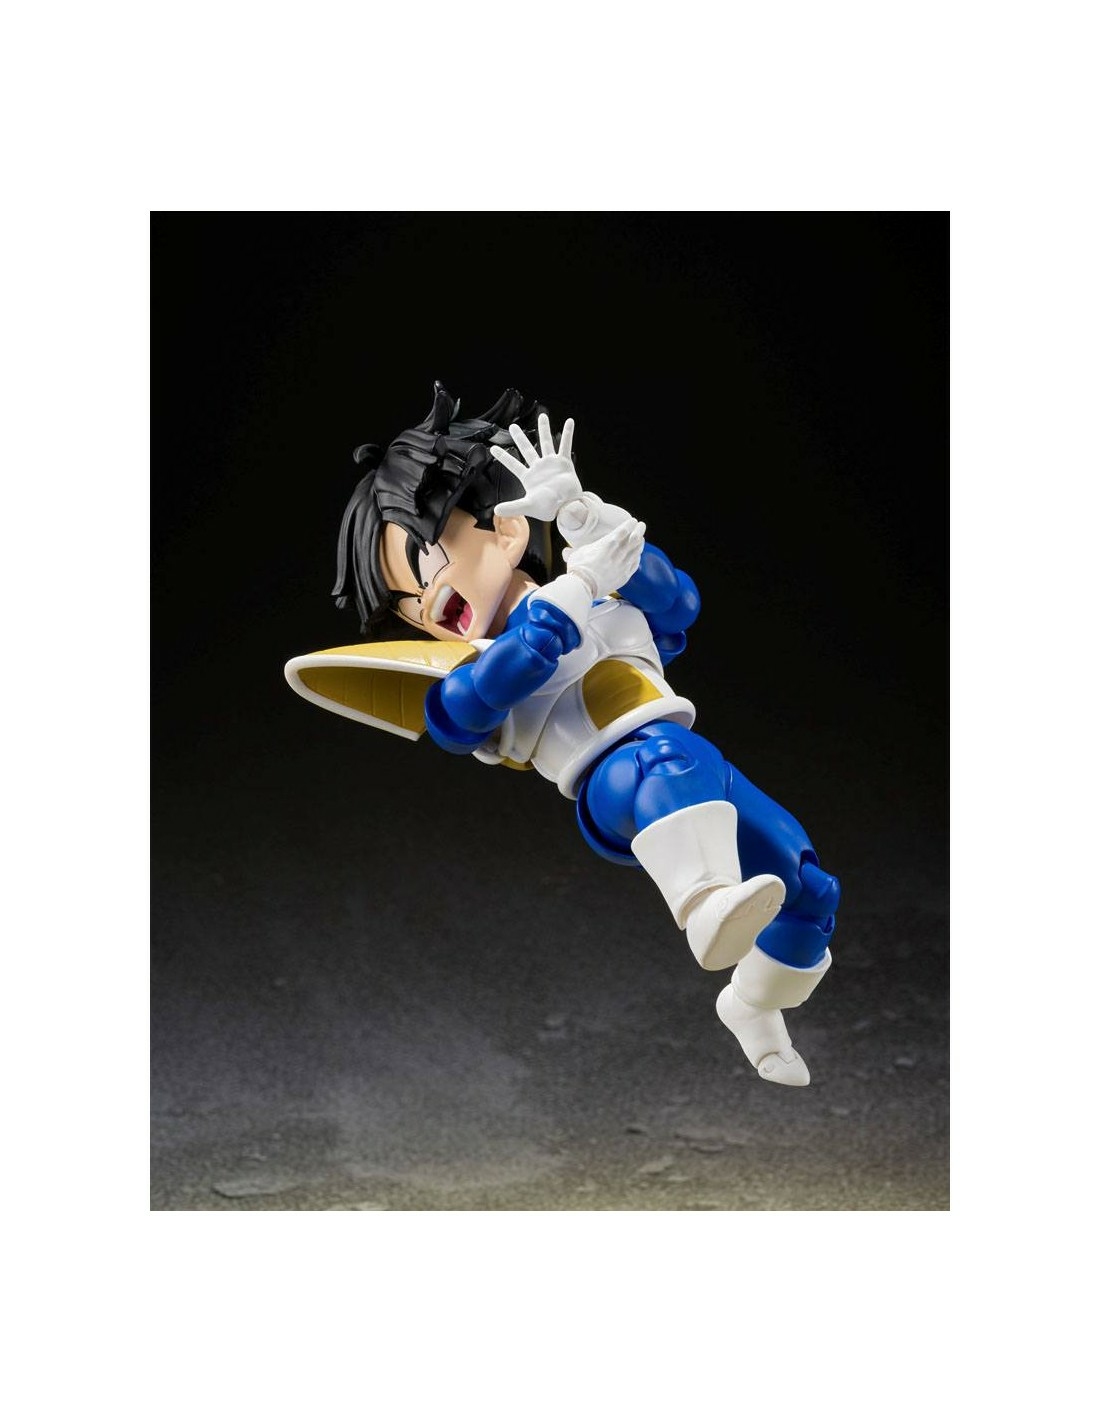 DRAGON BALL Z - Son Gohan - Figurine articulée SH Figuarts 10cm